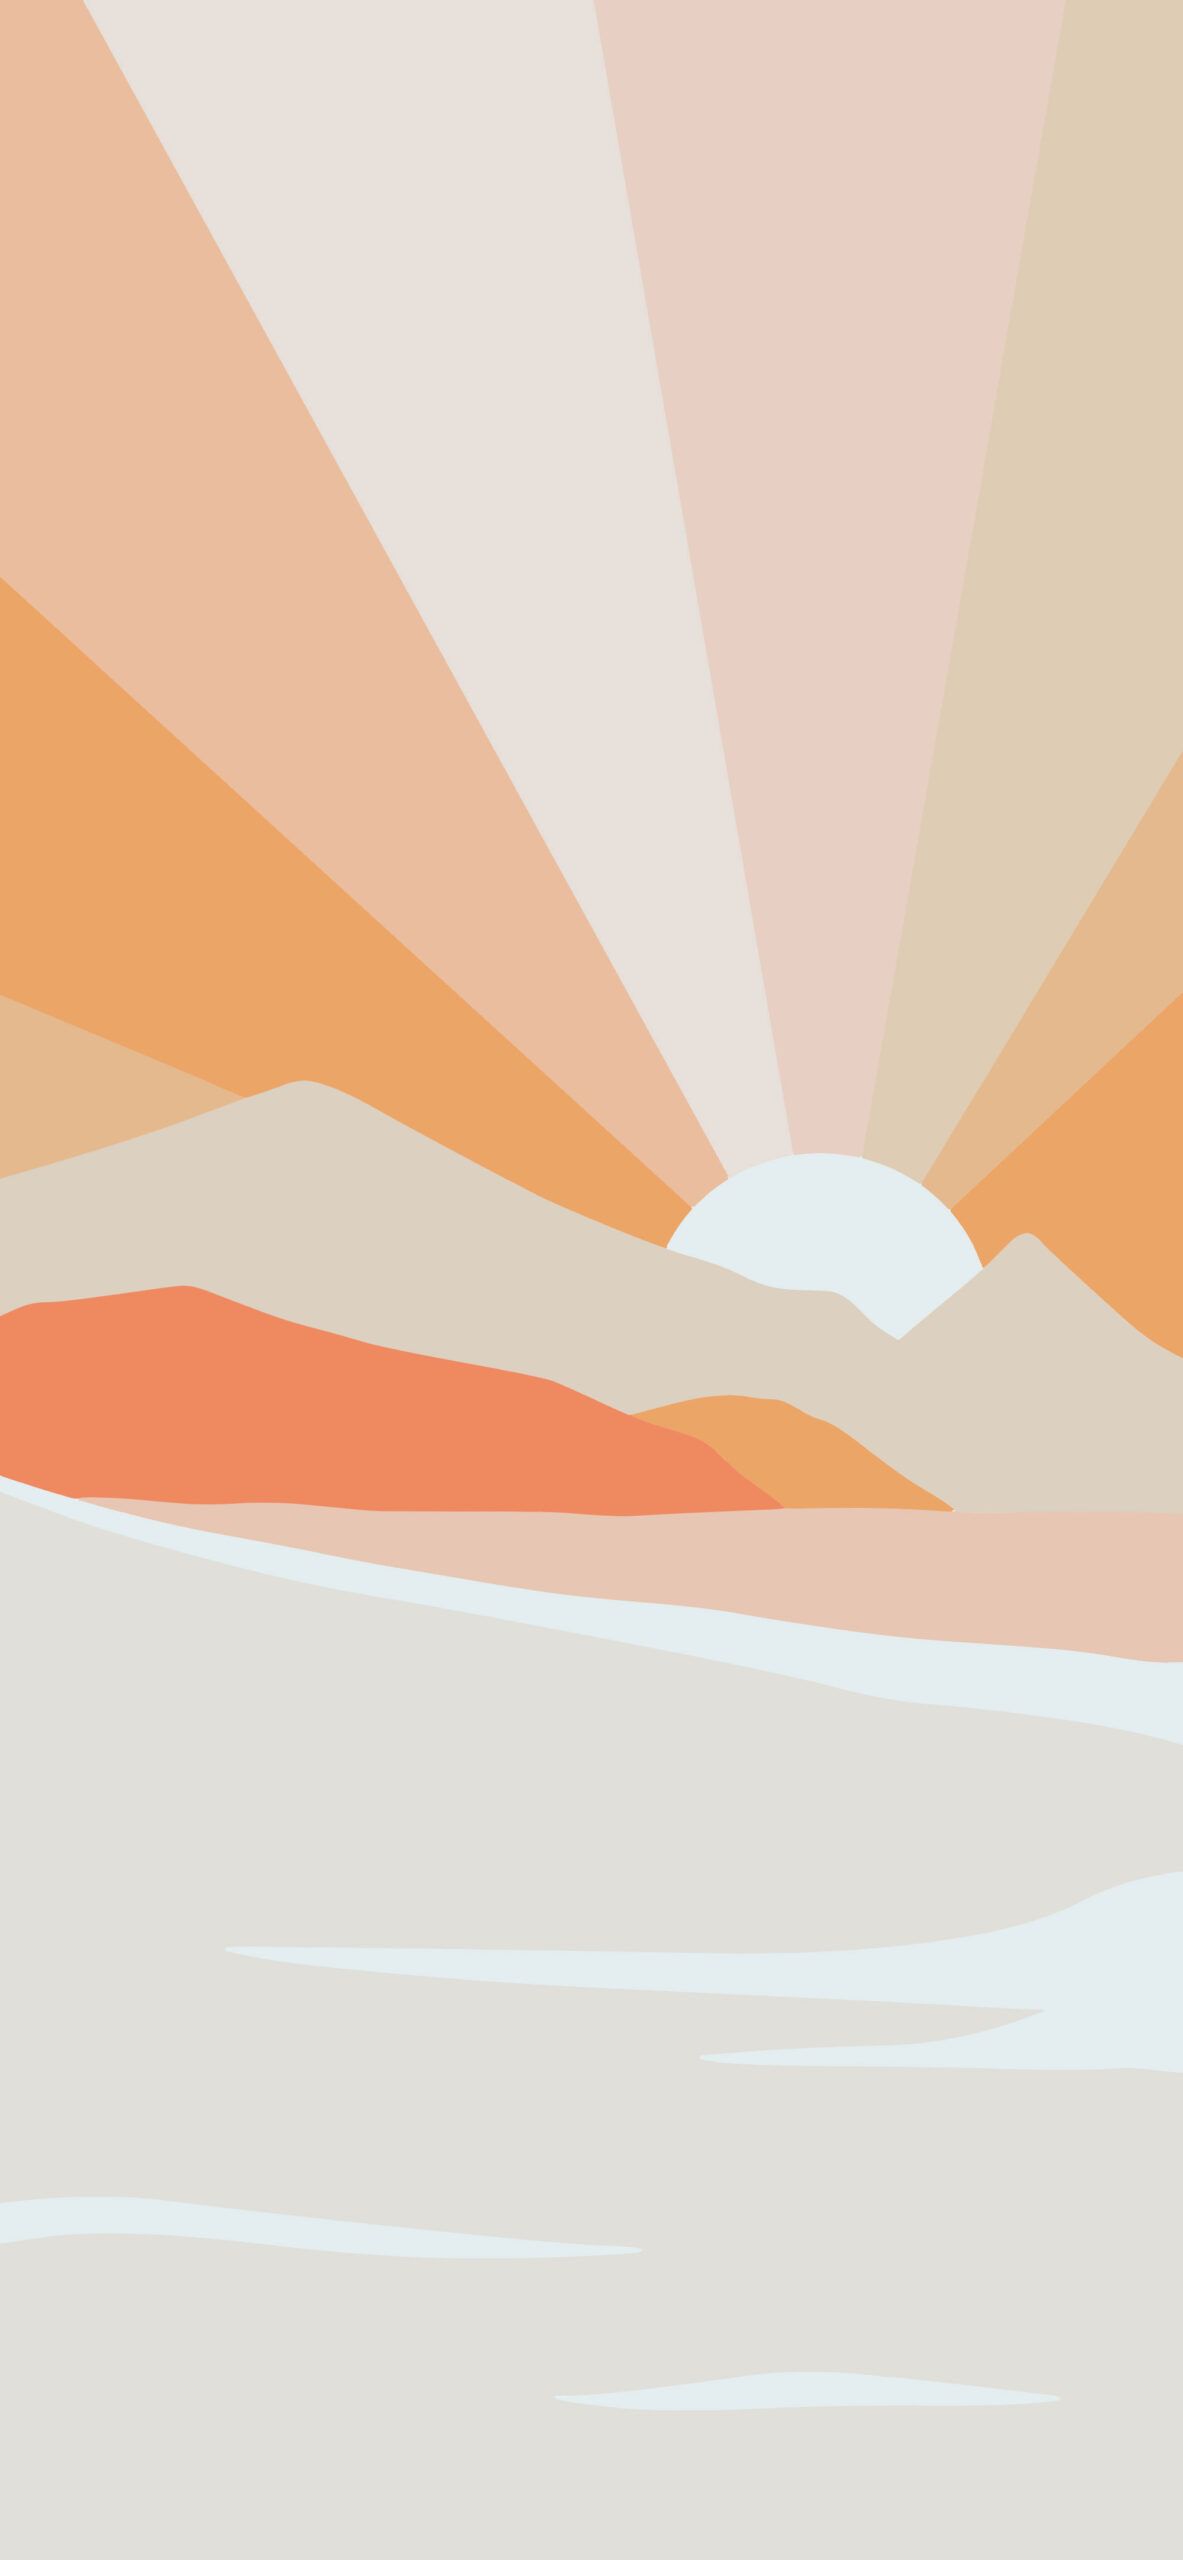  Pastell Hintergrundbild 1183x2560. Sunset Pastel Wallpaper Aesthetic Wallpaper for iPhone & Android